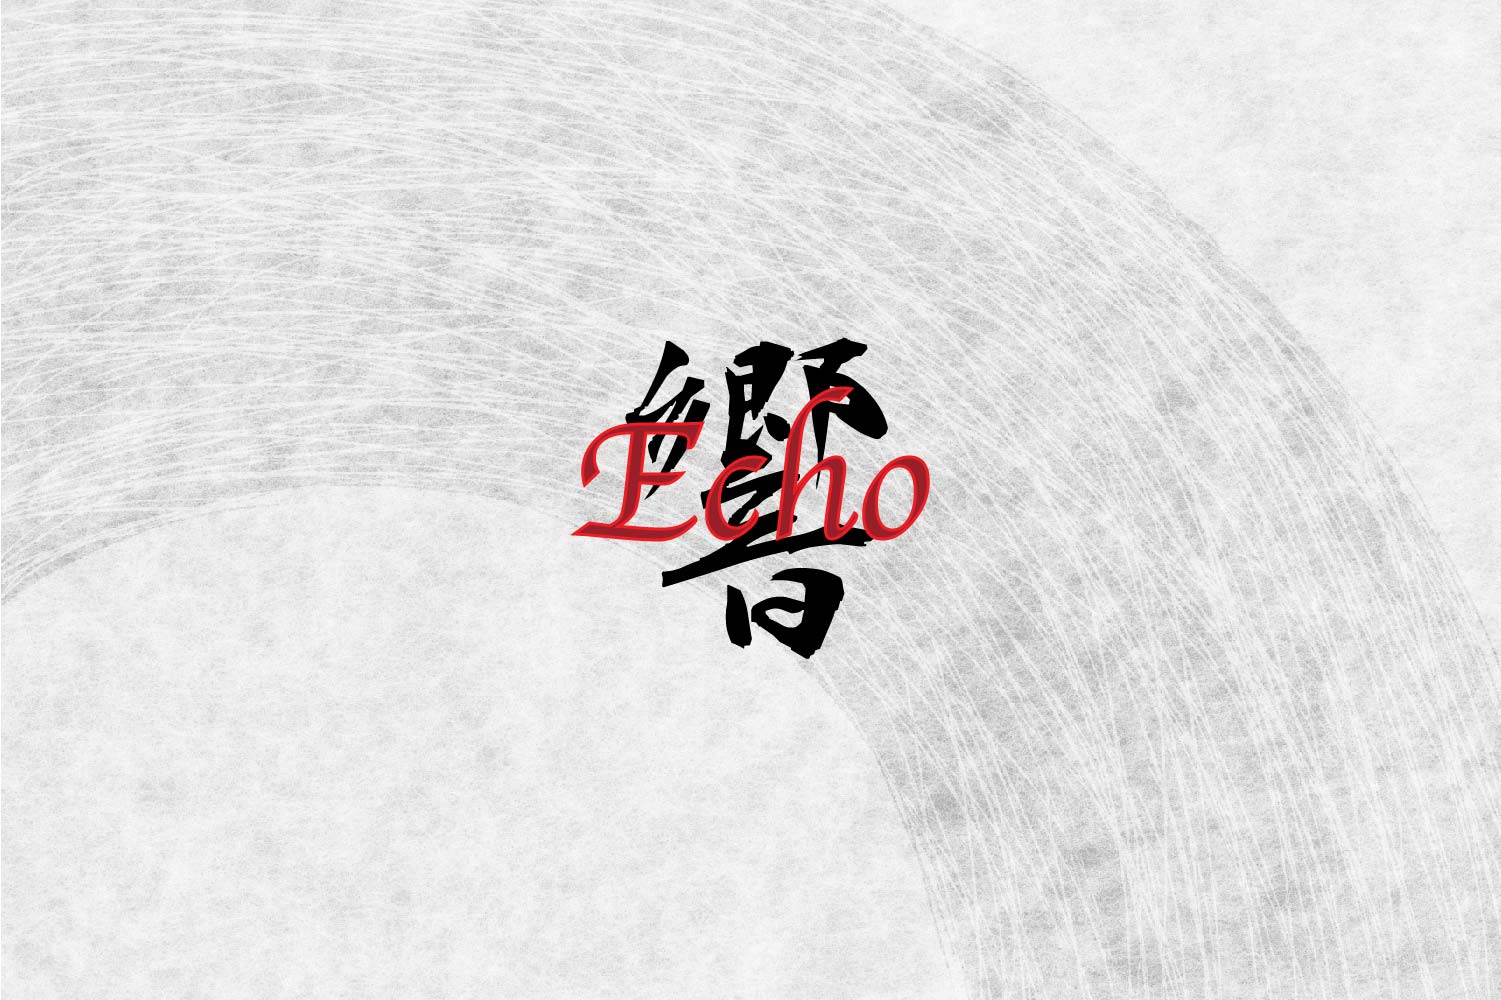 Japanese Writing tattoo idea - Echo , resound, vibration in brush stroke Kanji